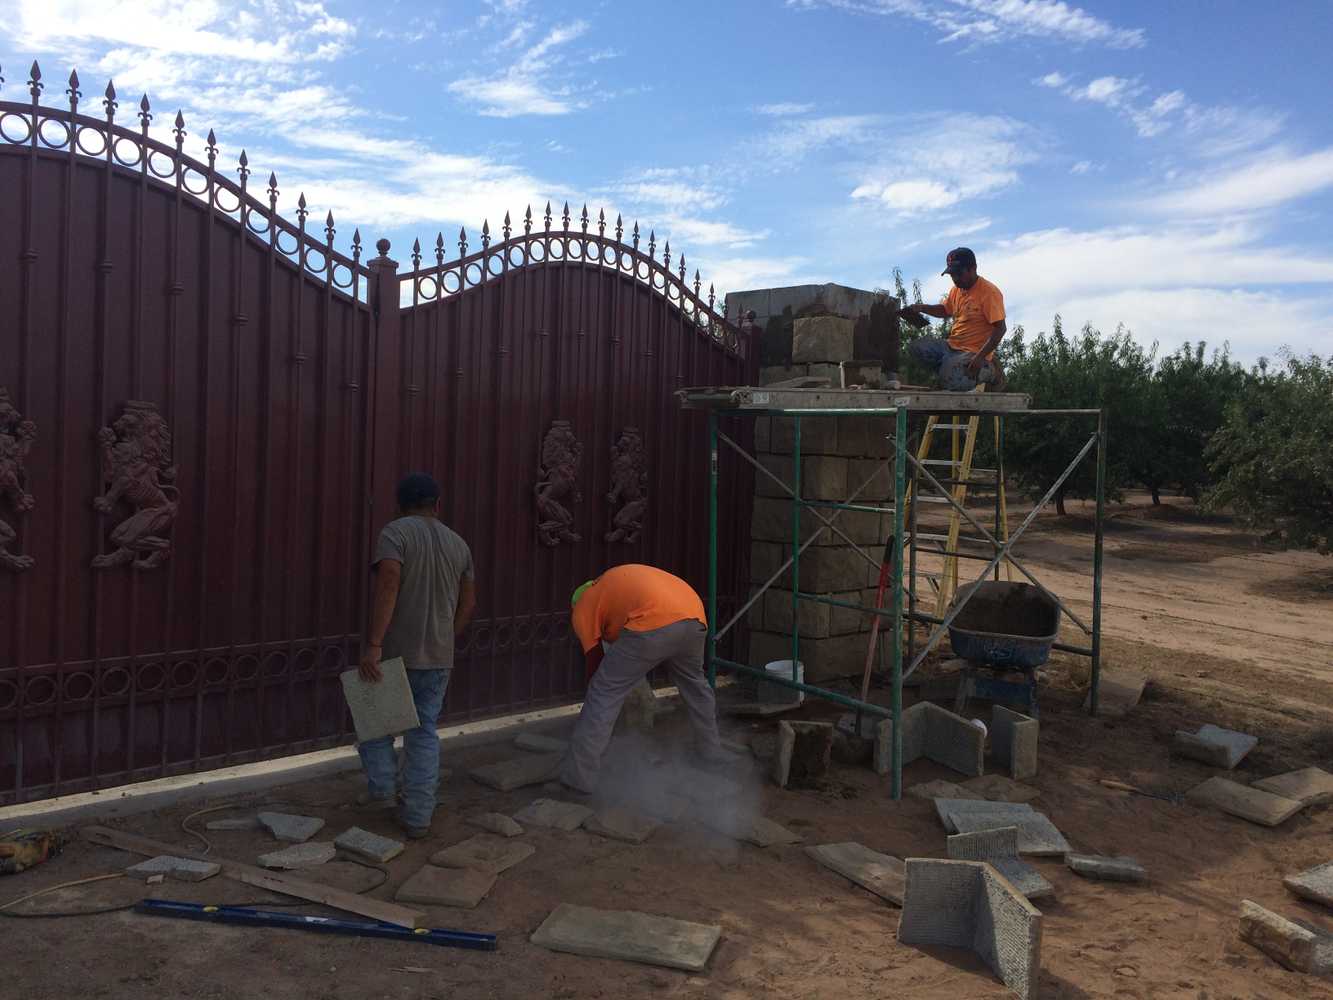 Wrought iron fence with gates at Madera Ranchos